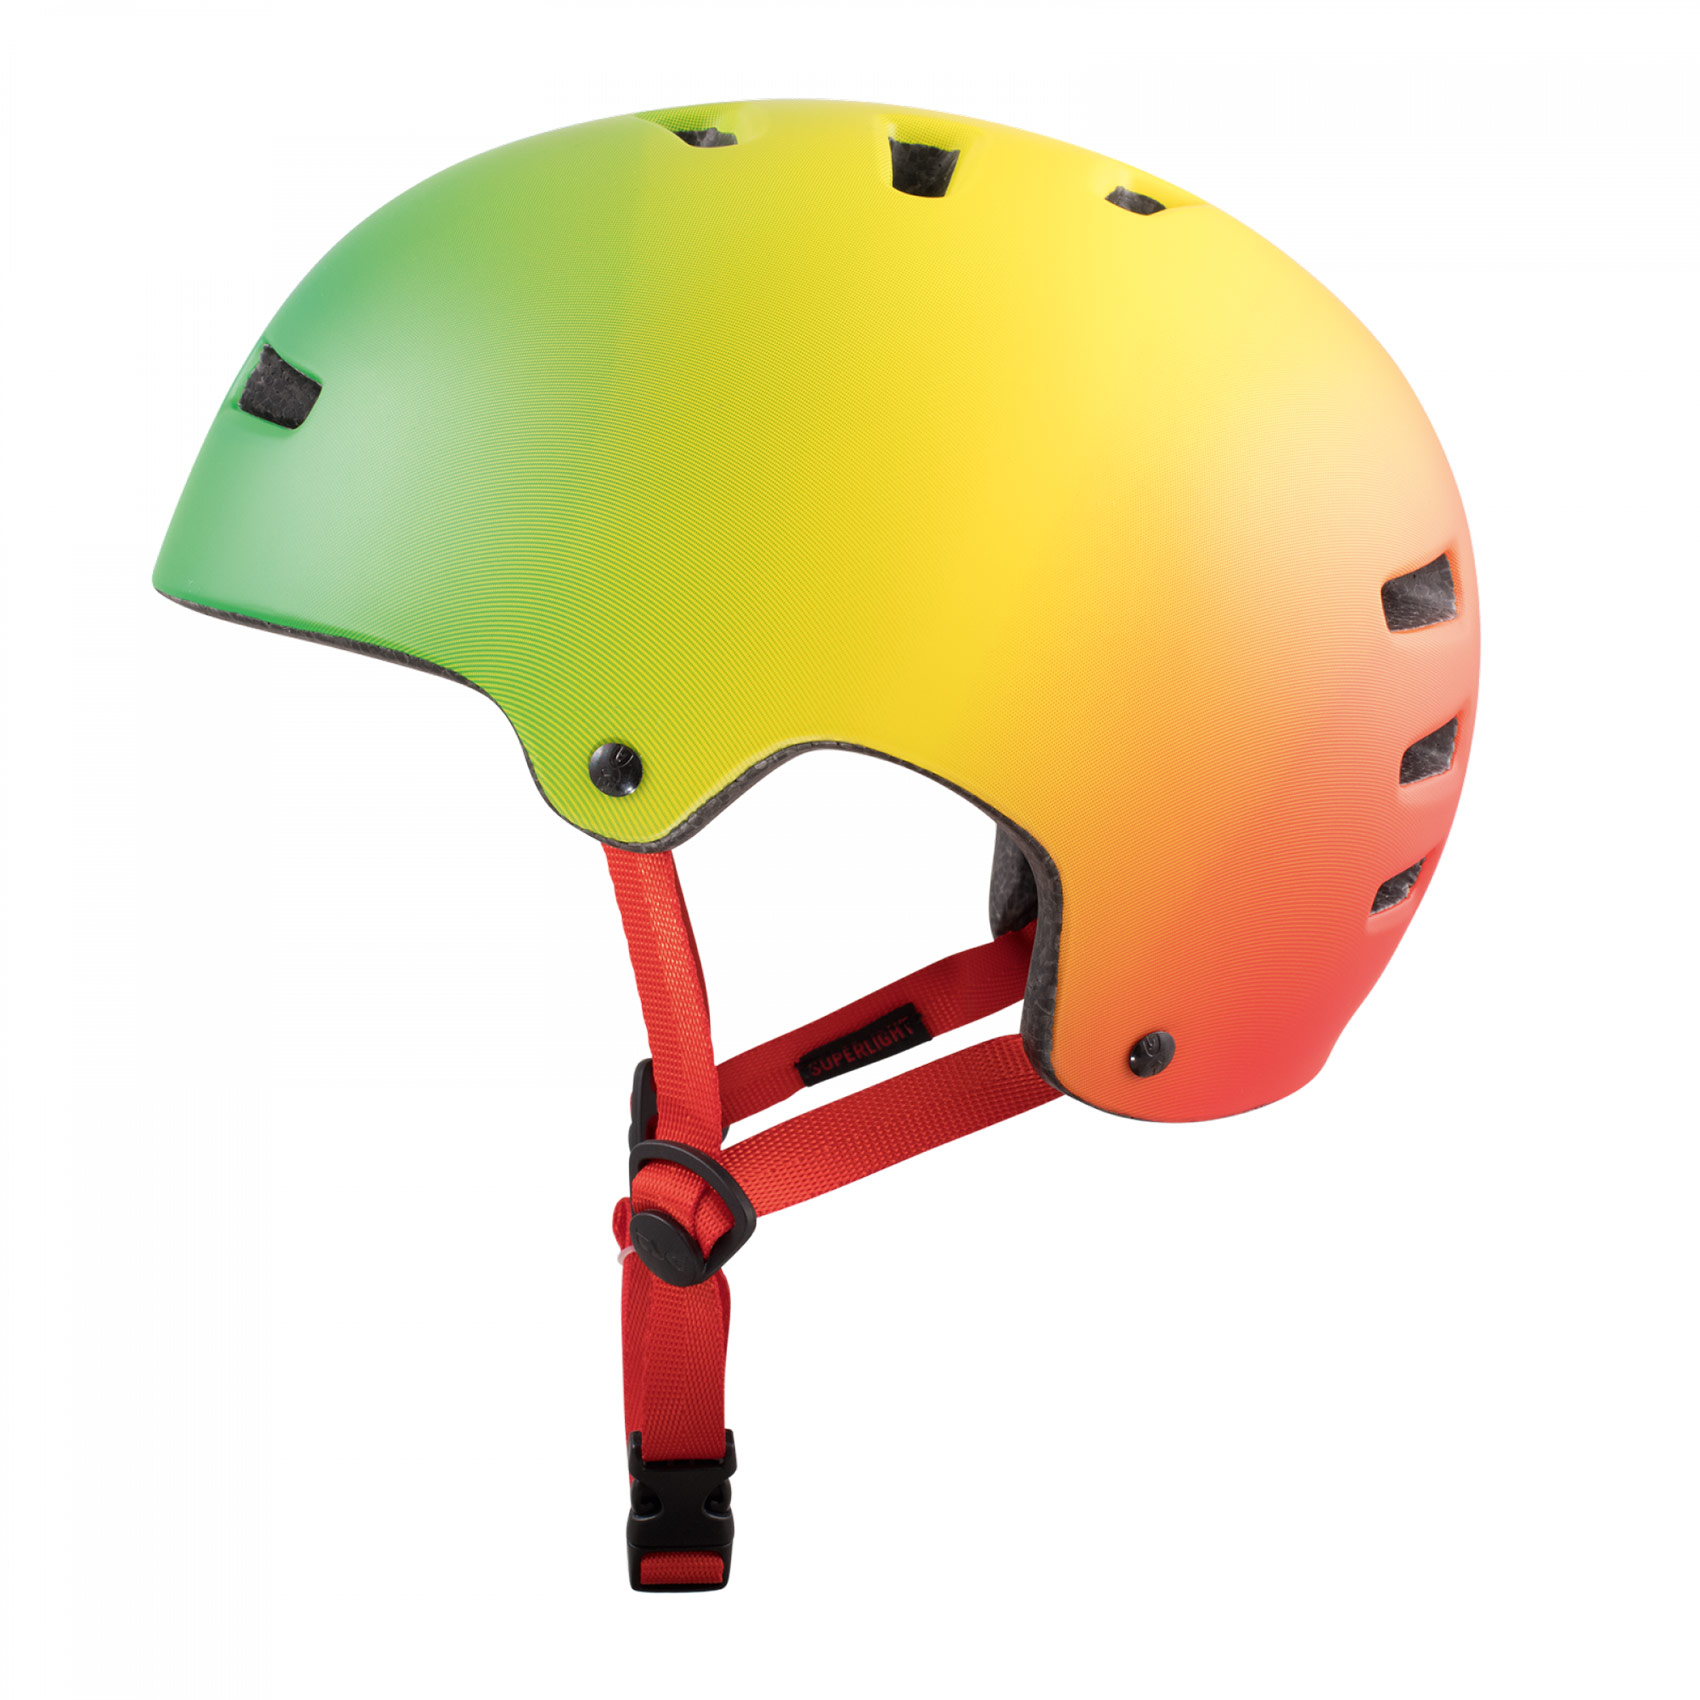 TSG Helm Superlight Graphic Design (rasta)